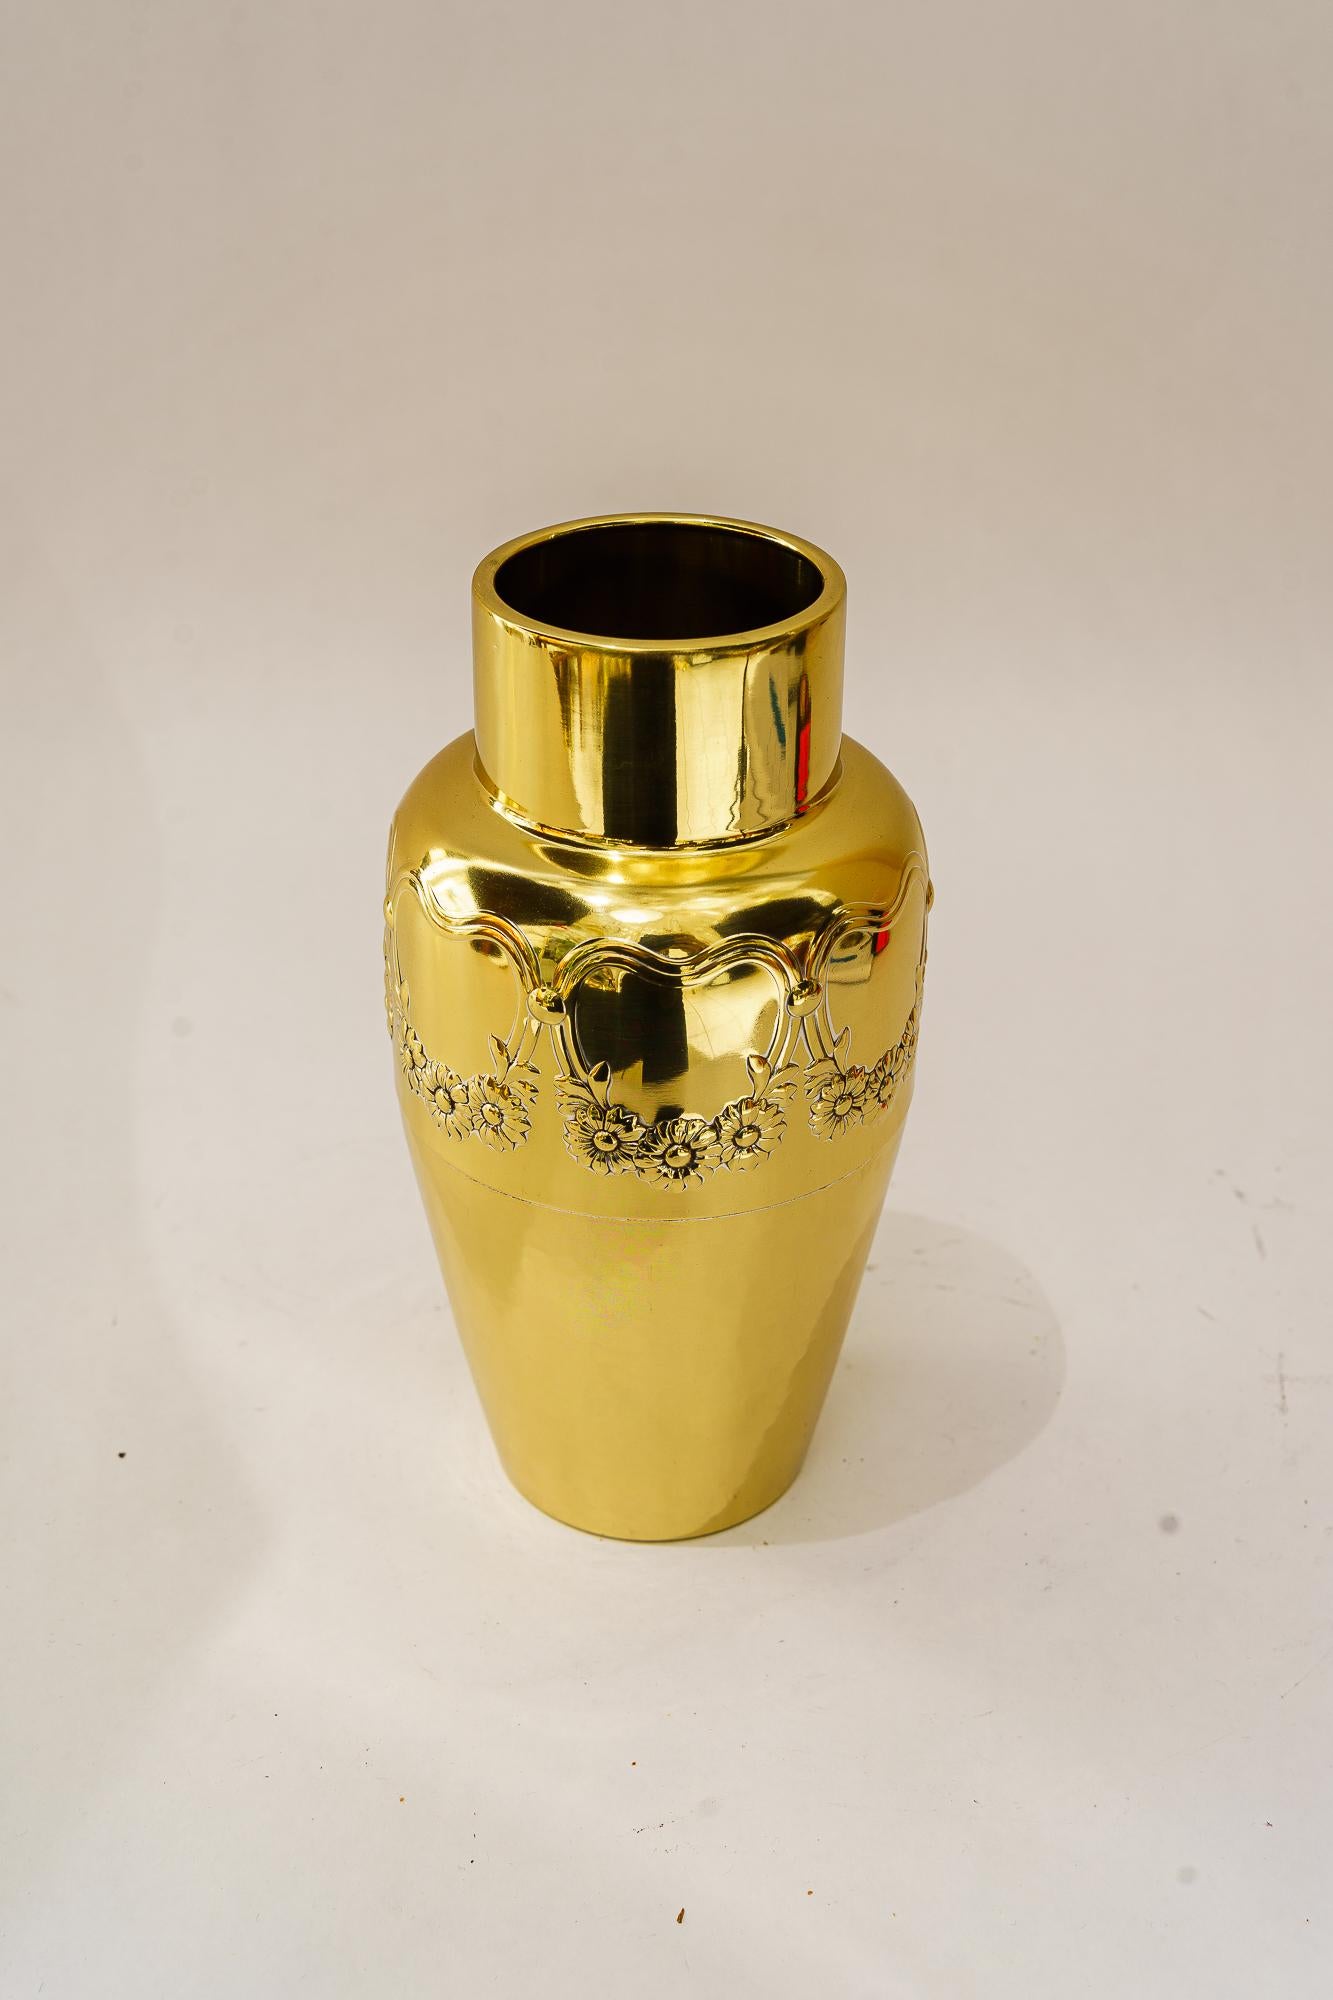 Art Deco WMF vase ( marked on bottom ) vienna around 1920s
Brass polished and stove enameled